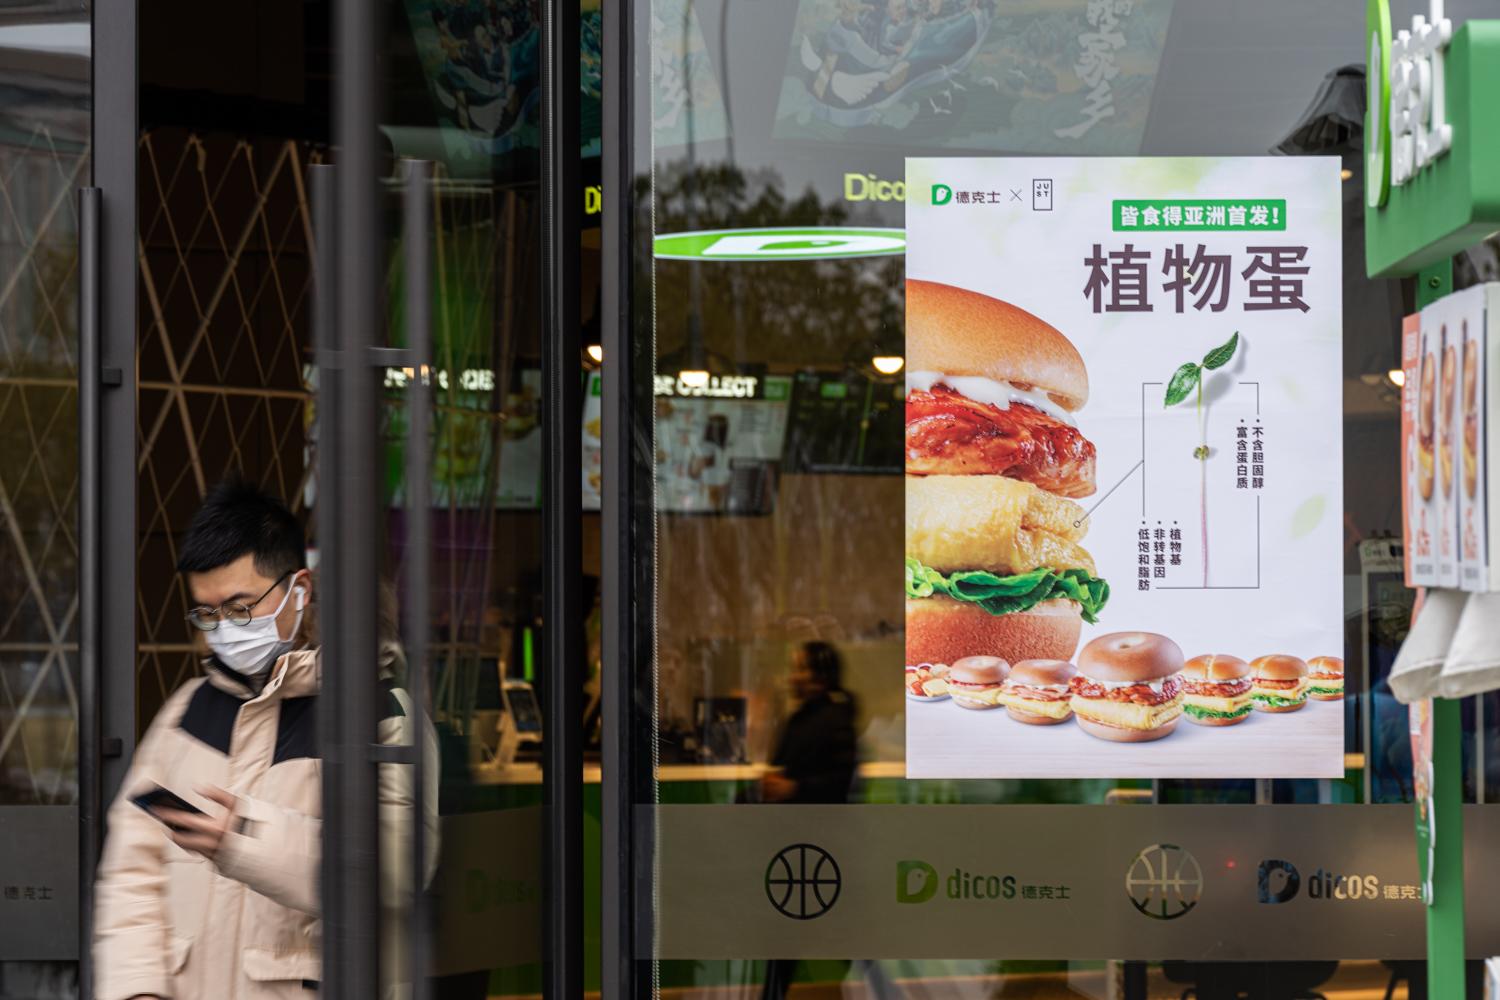 California vegan egg startup Eat Just yokes itself to China's fast food chain